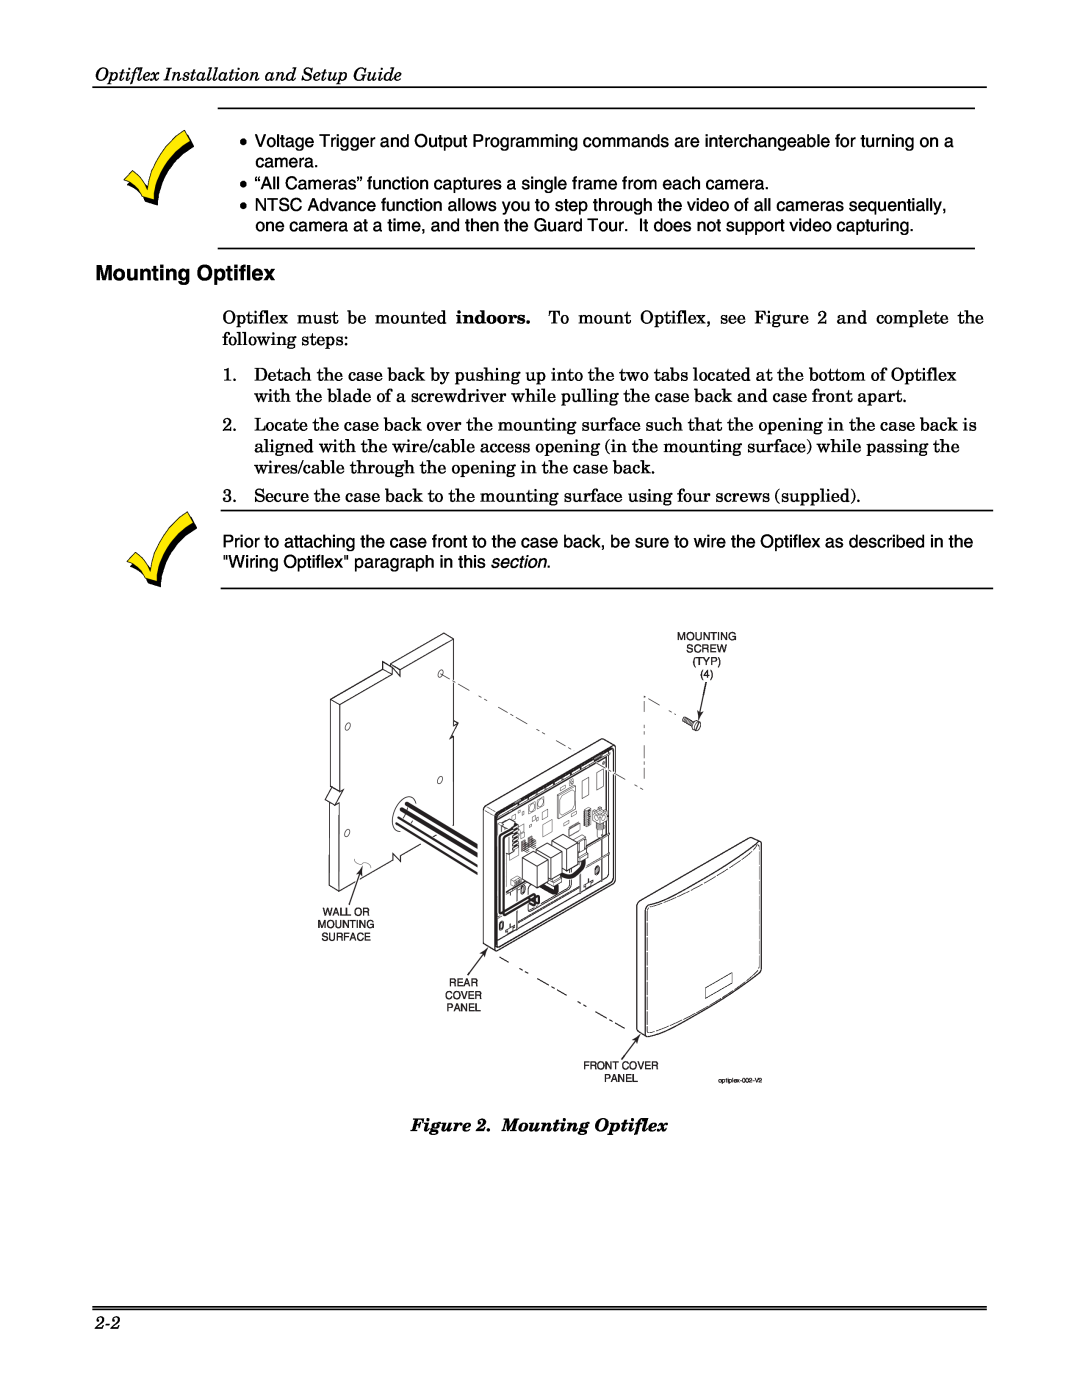 Honeywell setup guide Mounting Optiflex, Optiflex Installation and Setup Guide 